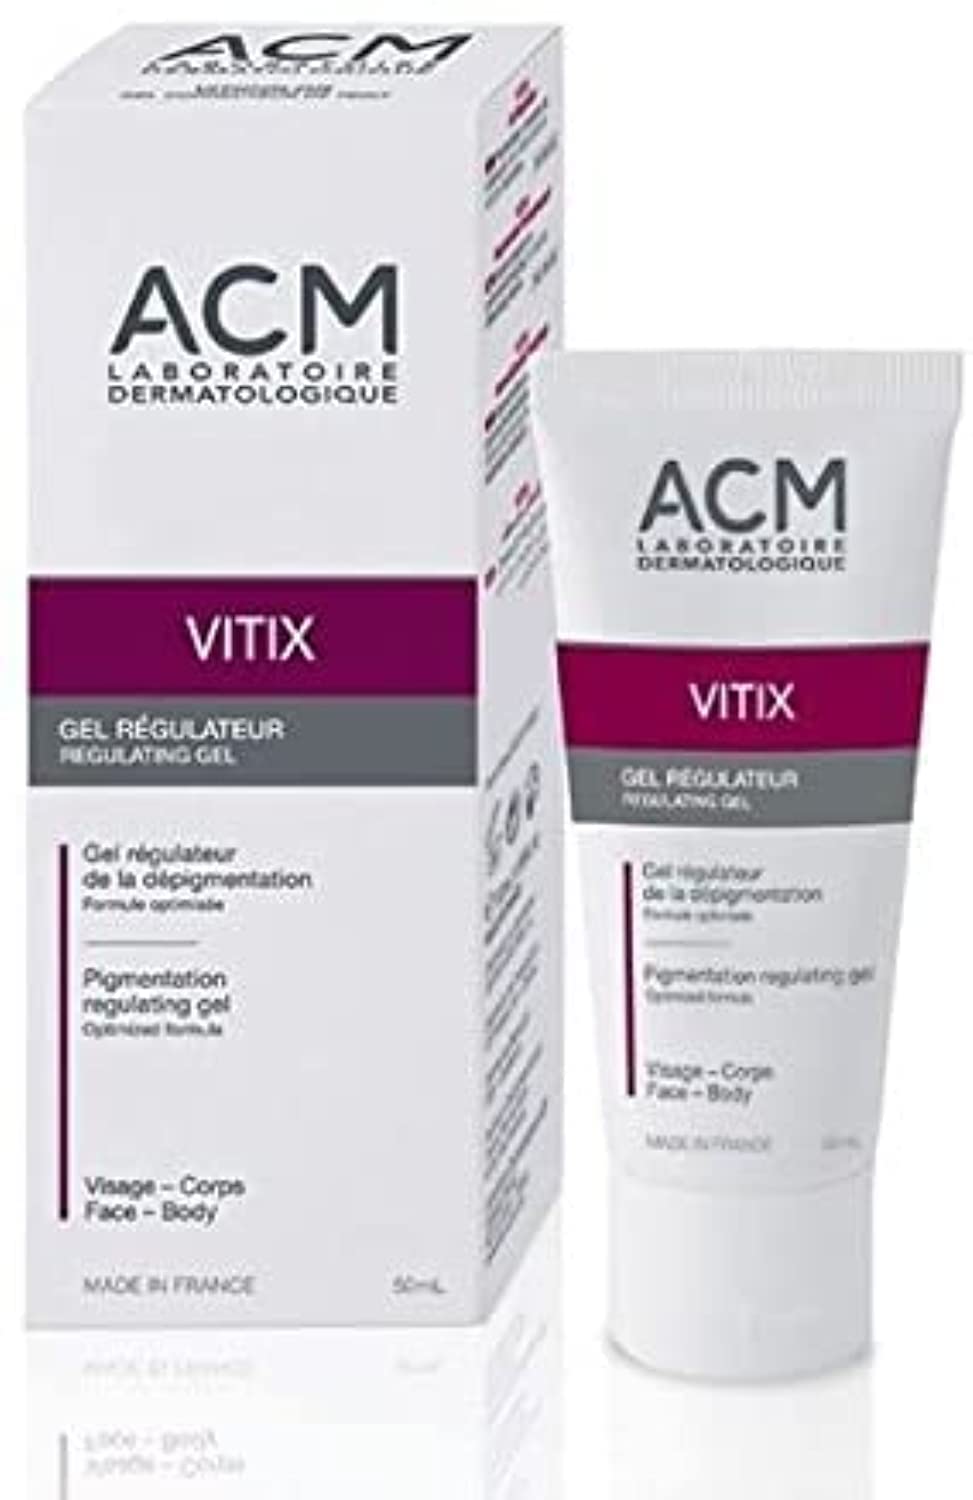 ACM VITIX AcM Laboratoire Vitix gEL Repigmentation Vitiligo Skin 50ml Vitiliginous Skin Treatment Beauty Skin